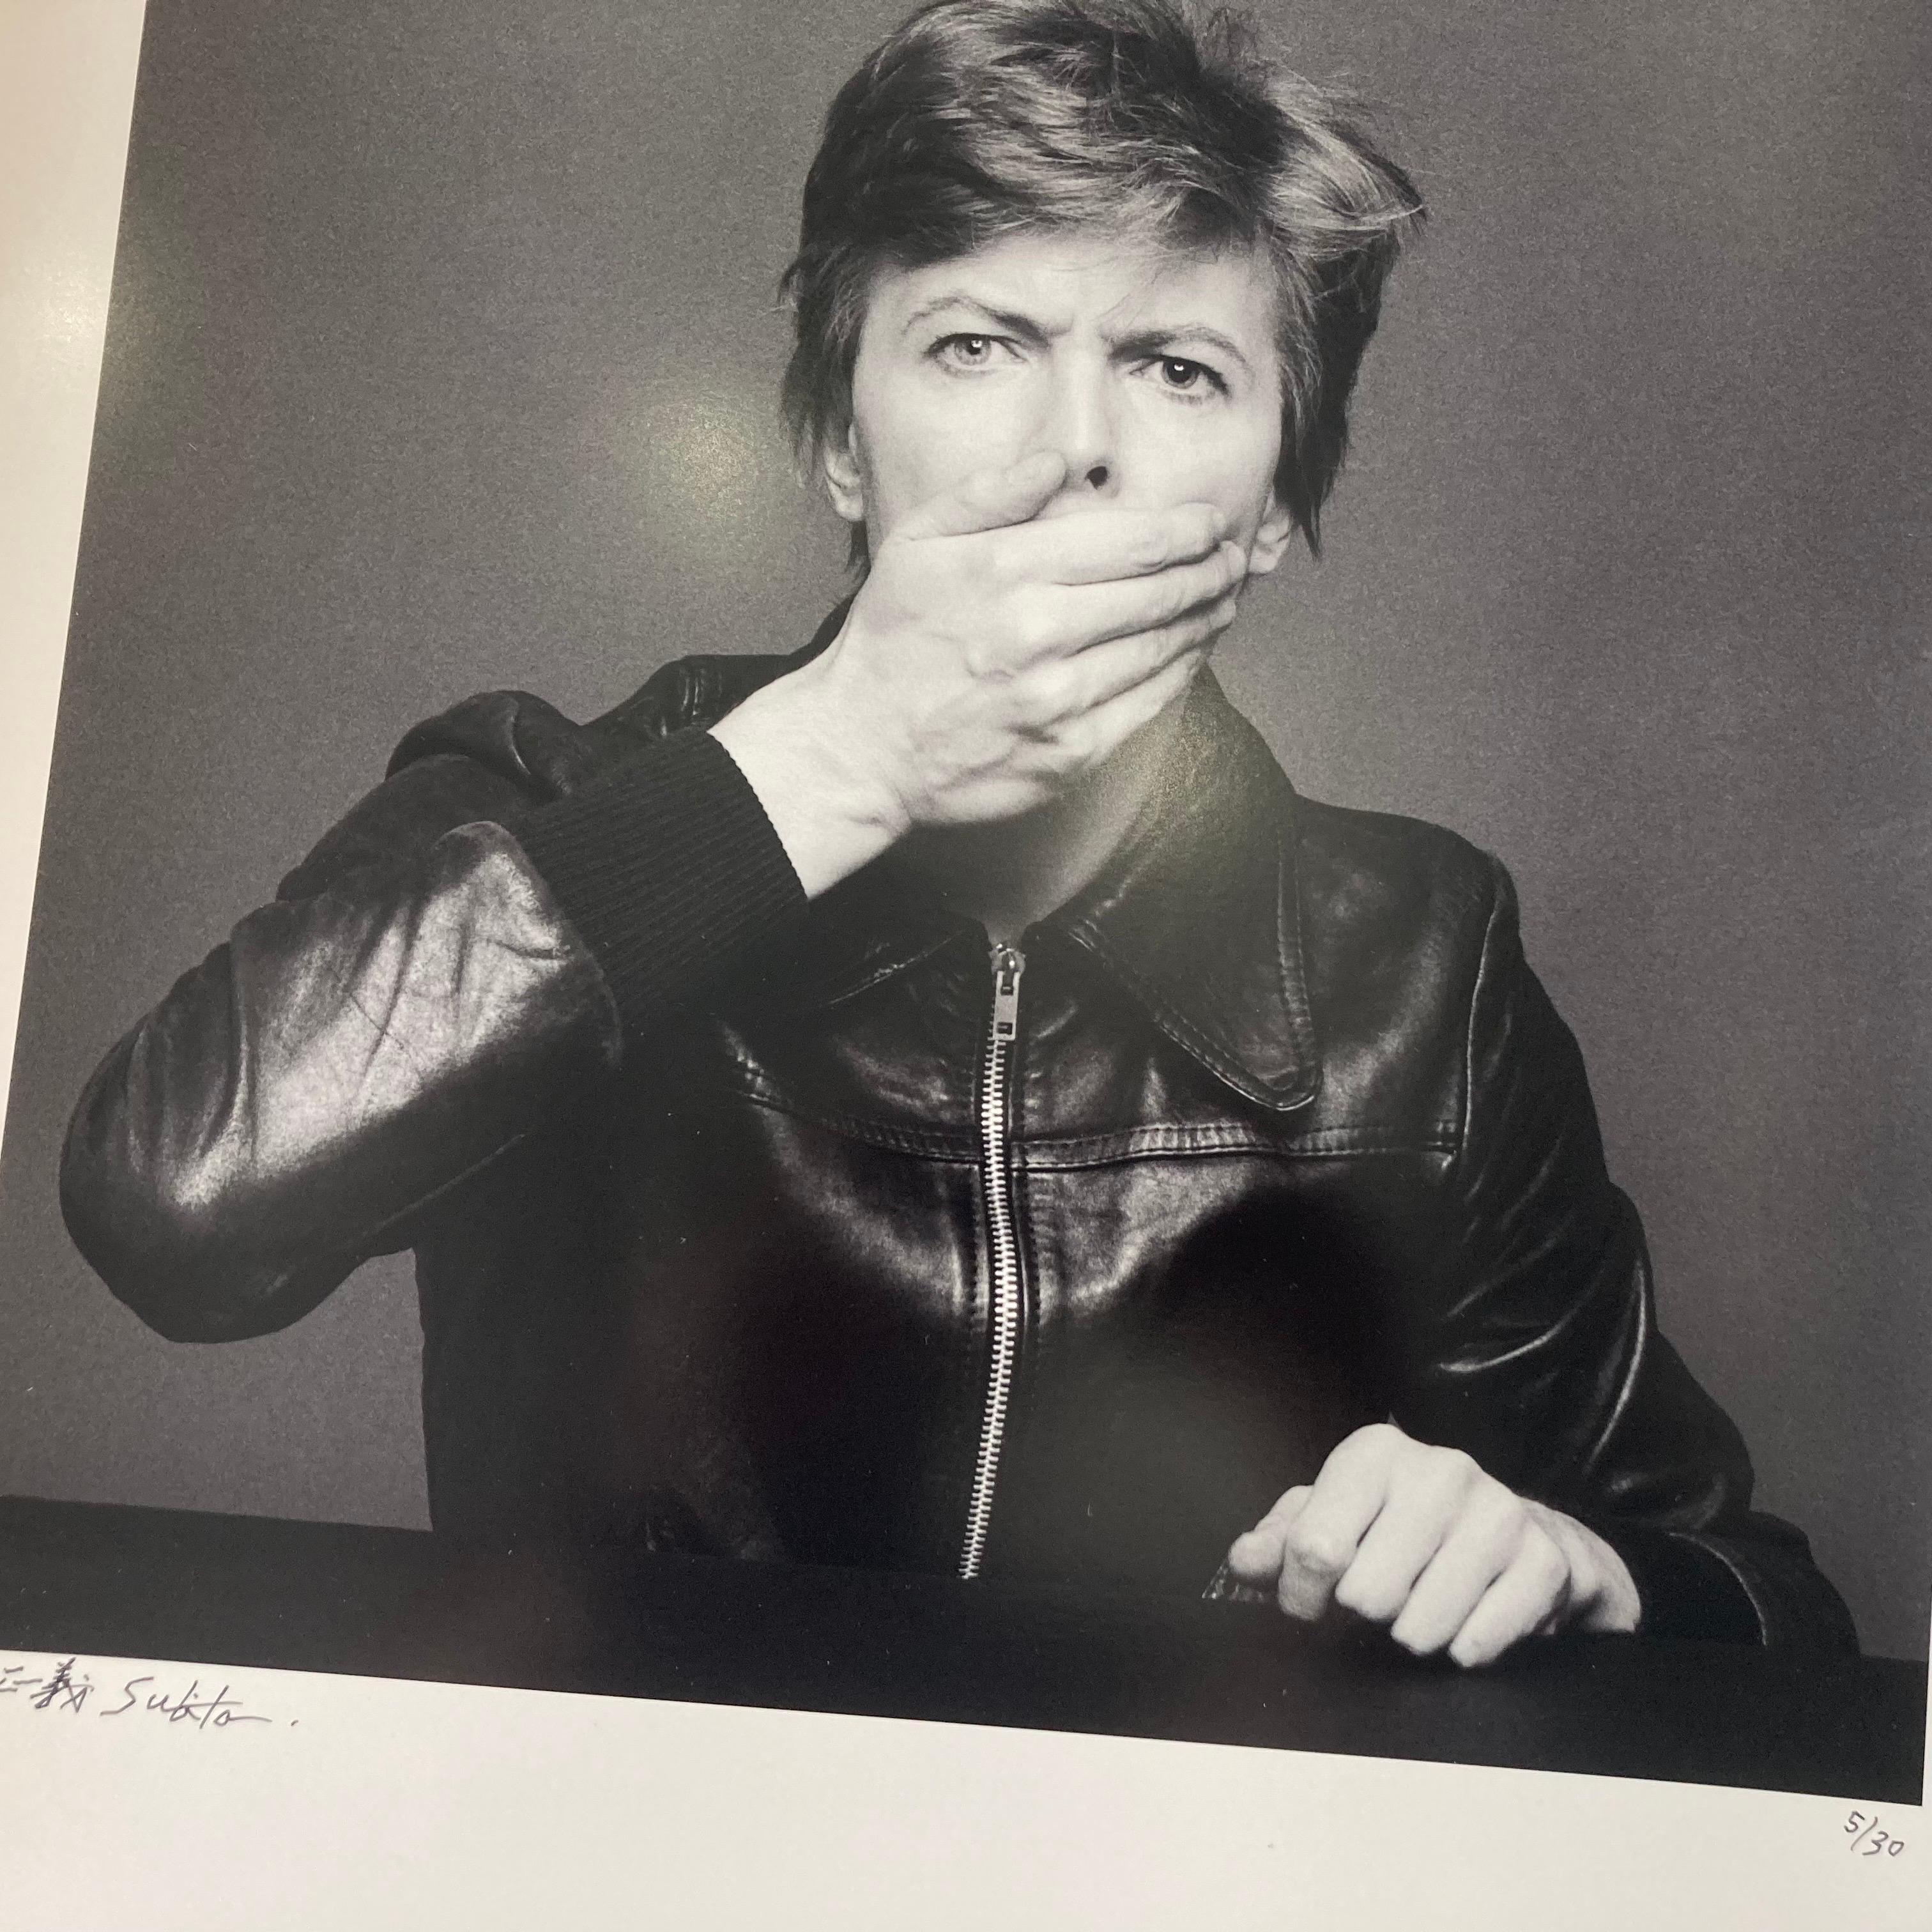 David Bowie 1977 Heroes session - set of three prints - Beige Portrait Photograph by Masayoshi Sukita